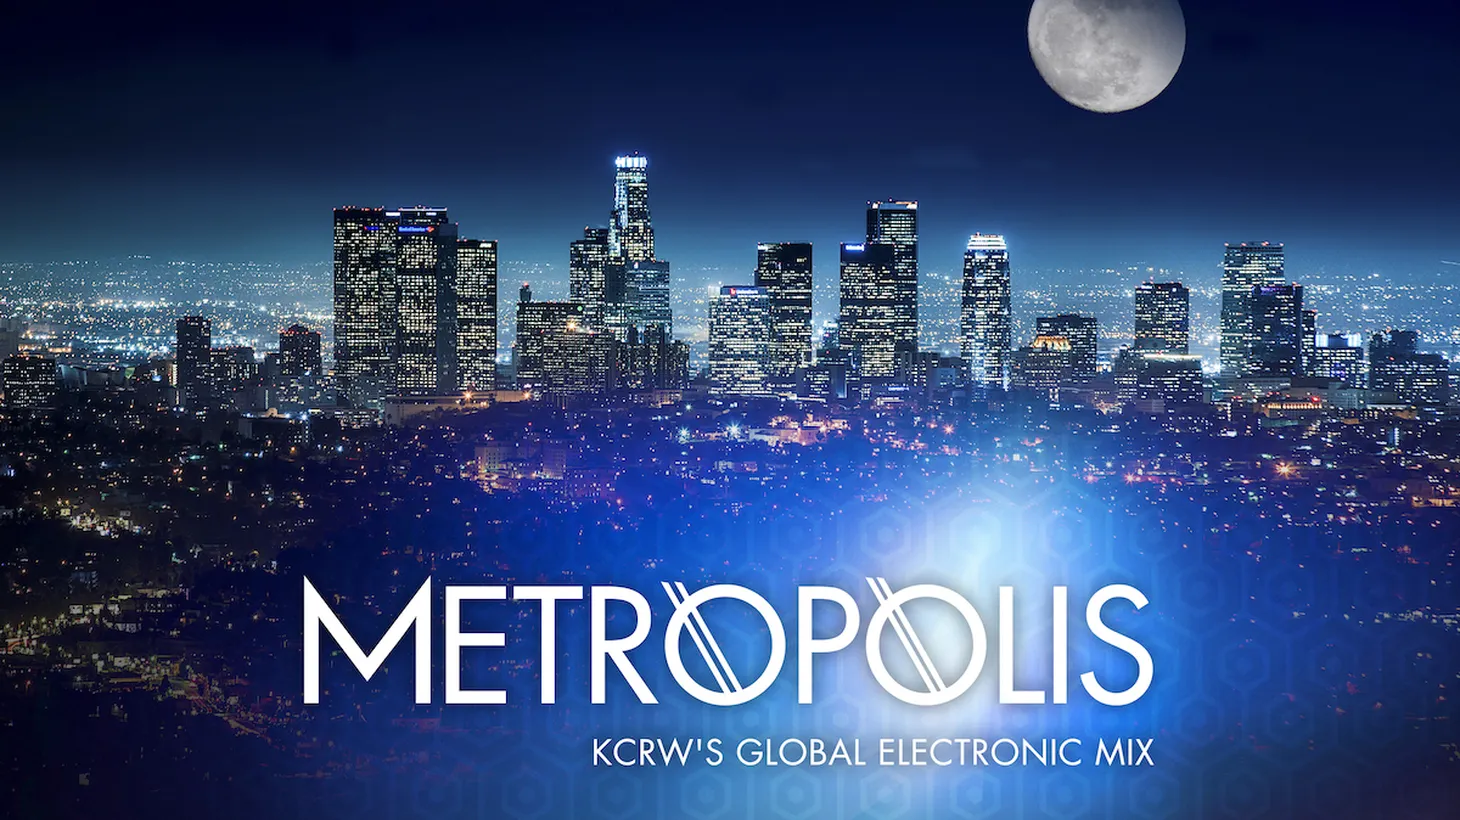 Metropolis playlist, October 9, 2021.